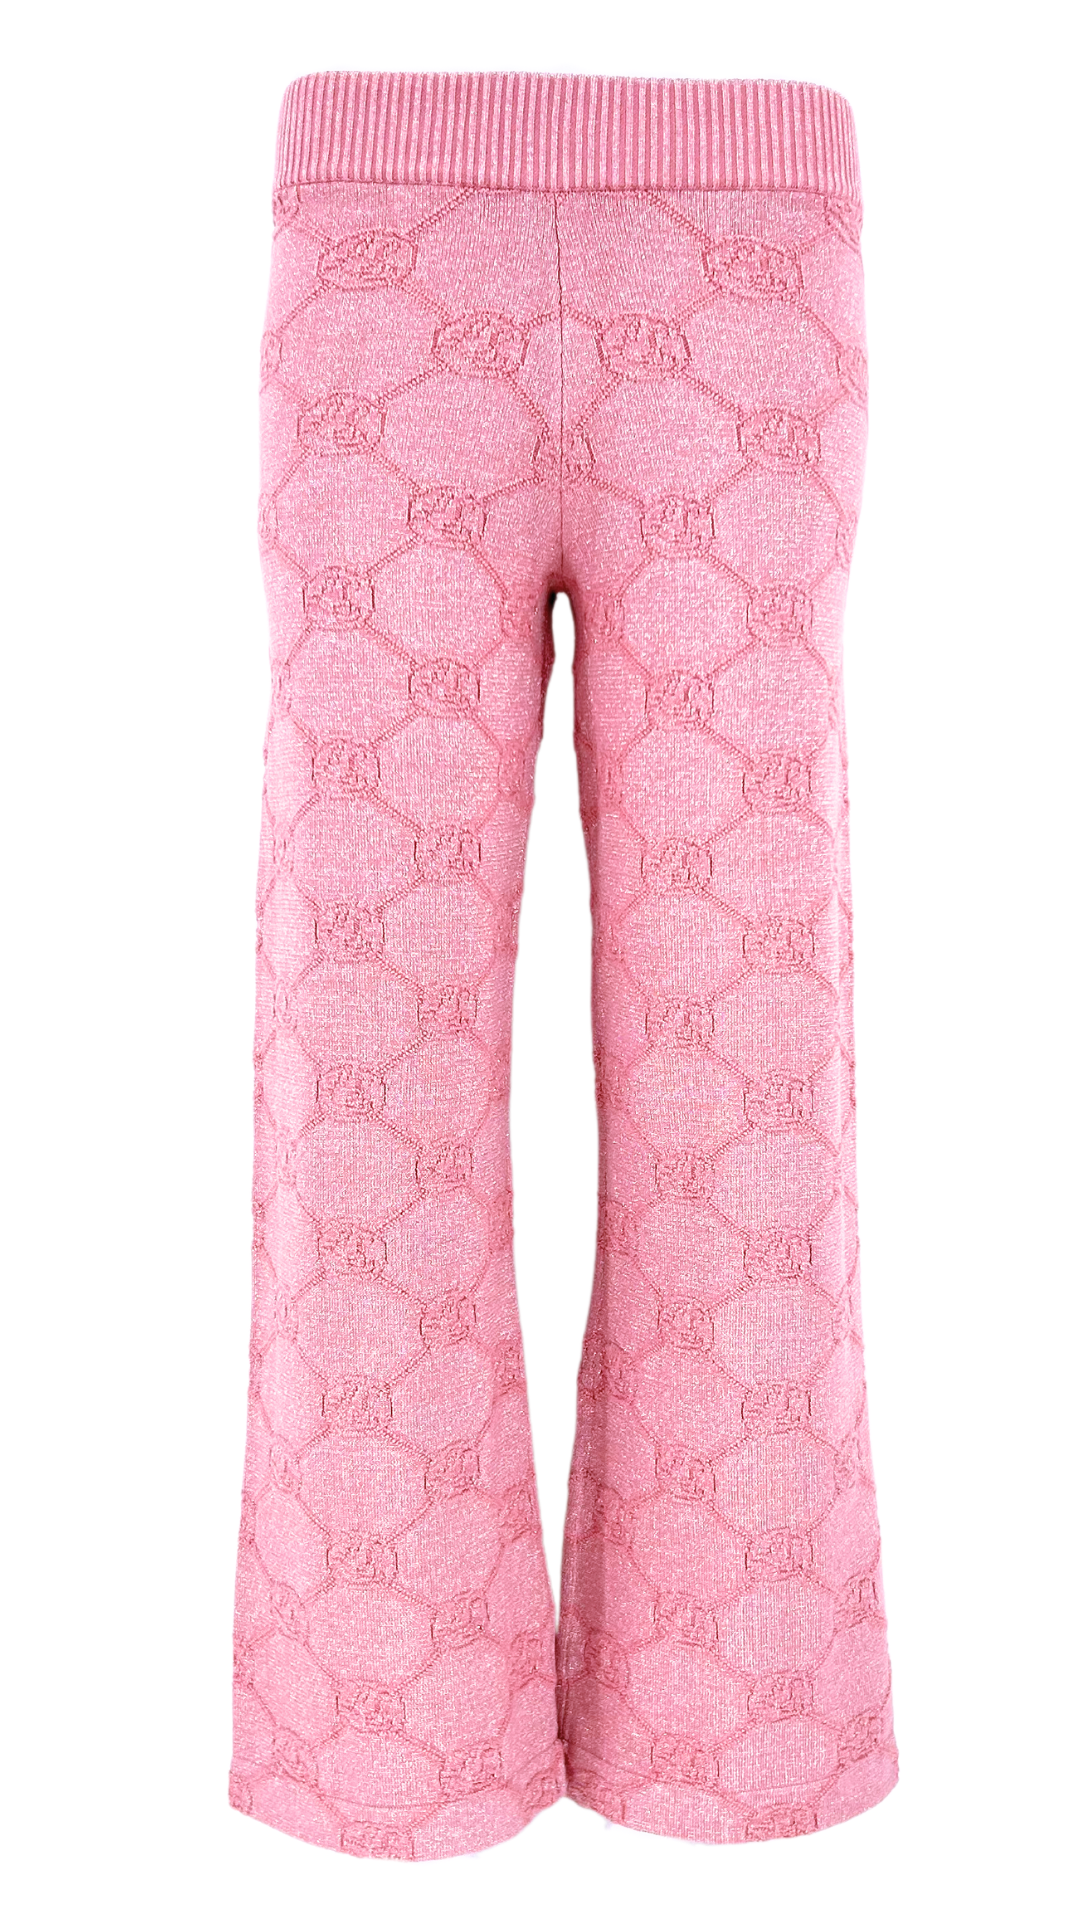 a pink pants with a mono logo pattern on it